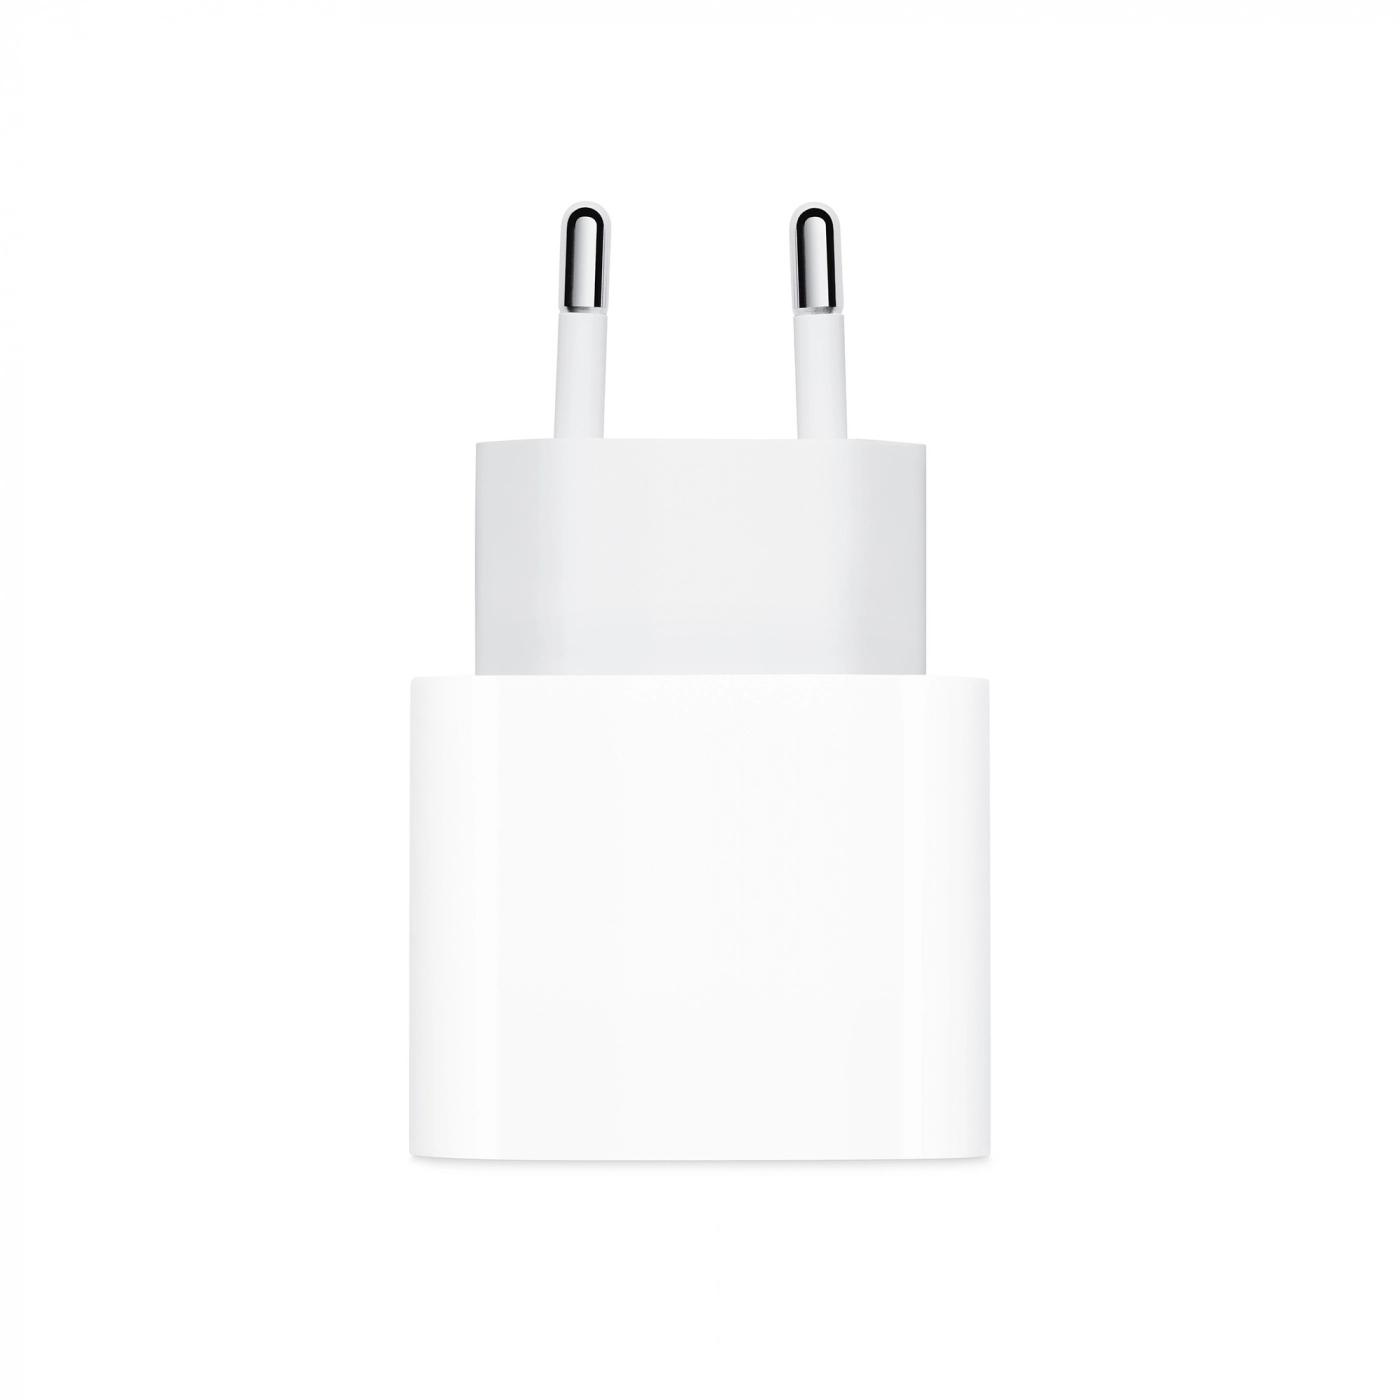 Купить Адаптер питания Apple 20W USB-C Power Adapter - фото 2